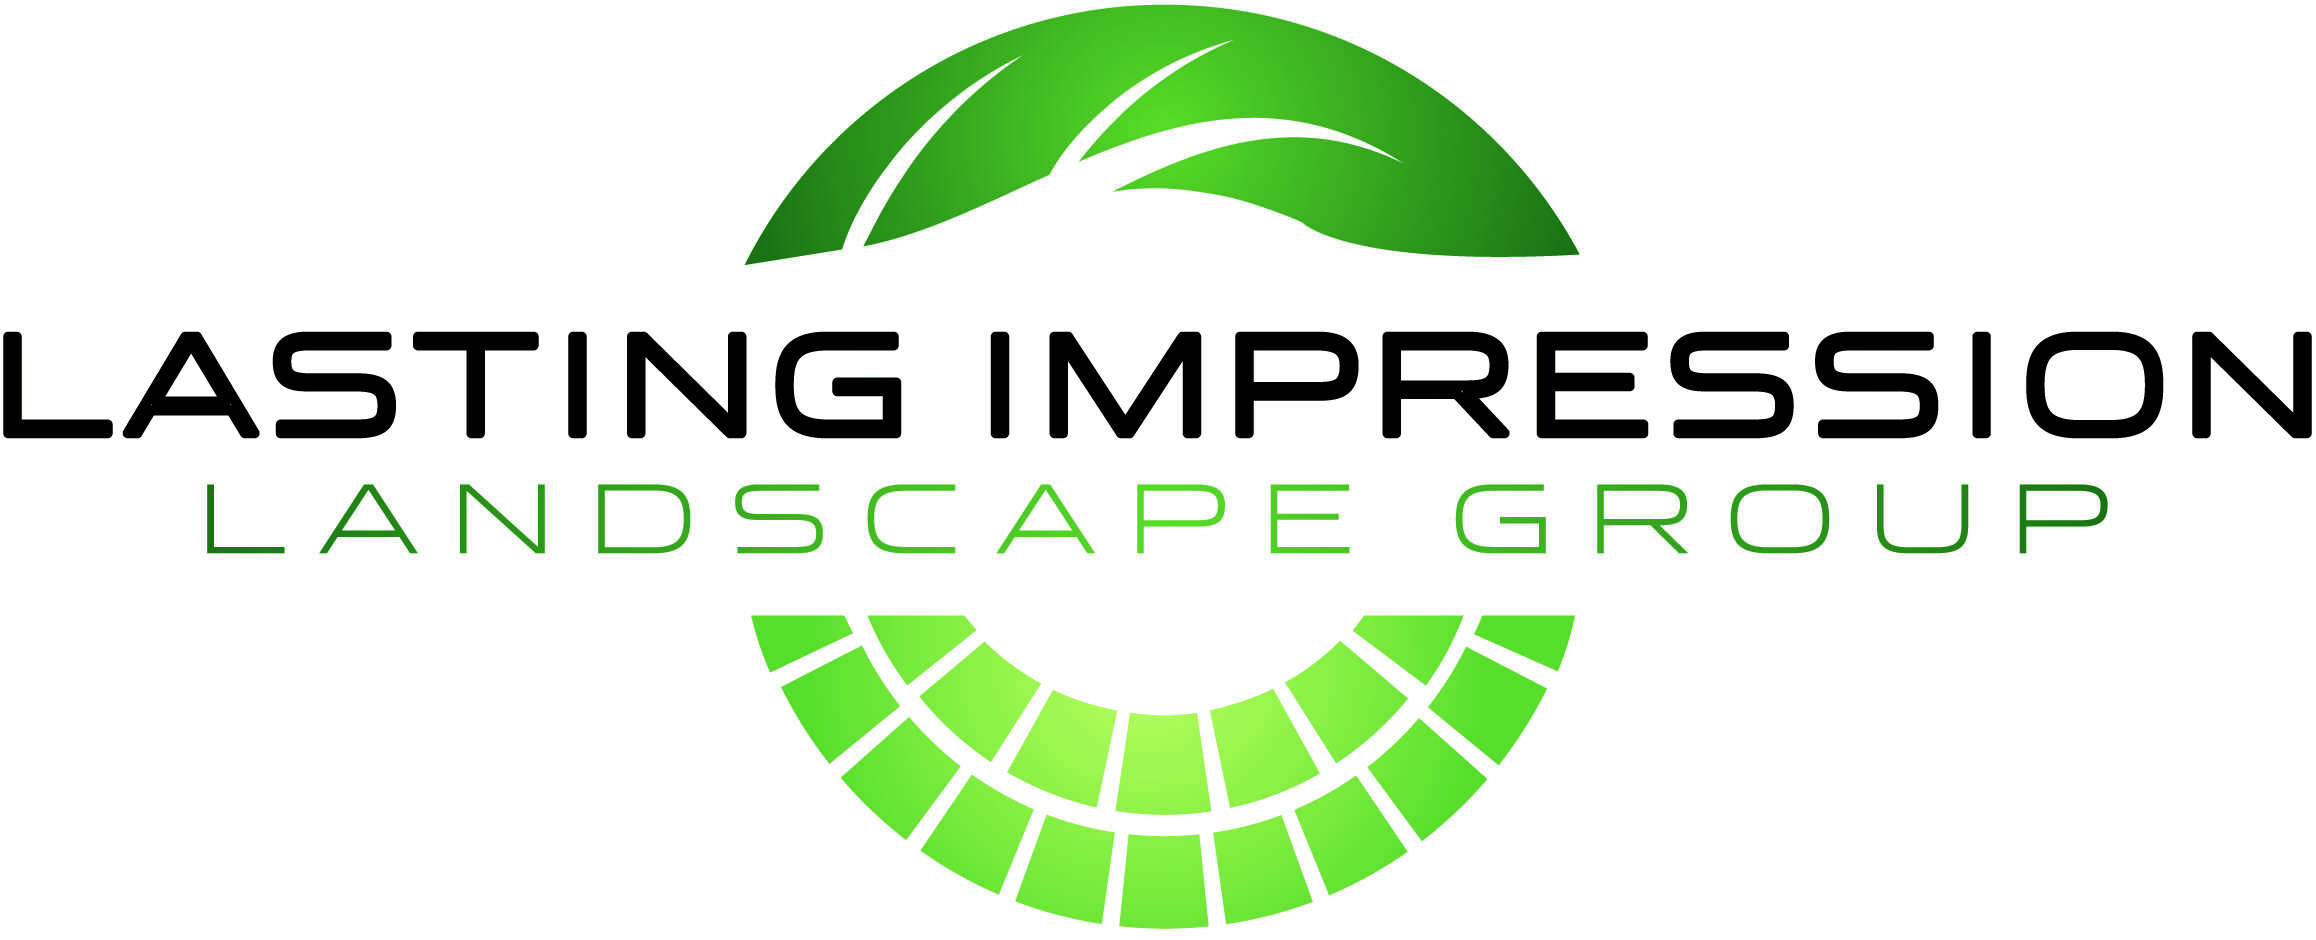 Lasting Impressions Landscaping